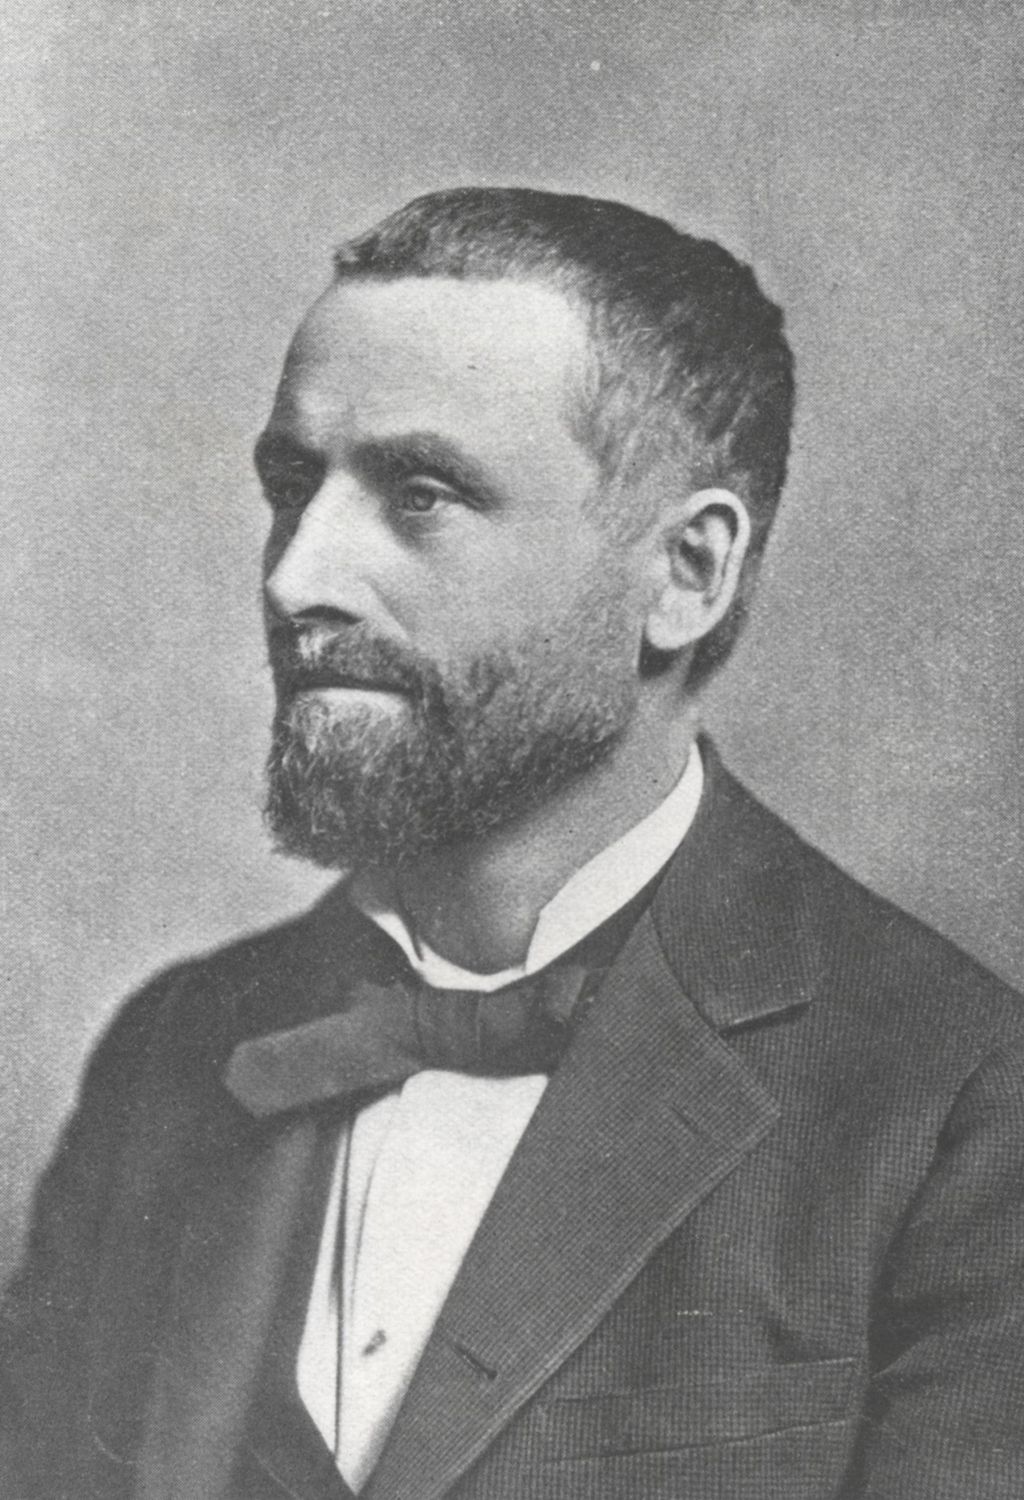 John P. Altgeld, Governor of Illinois